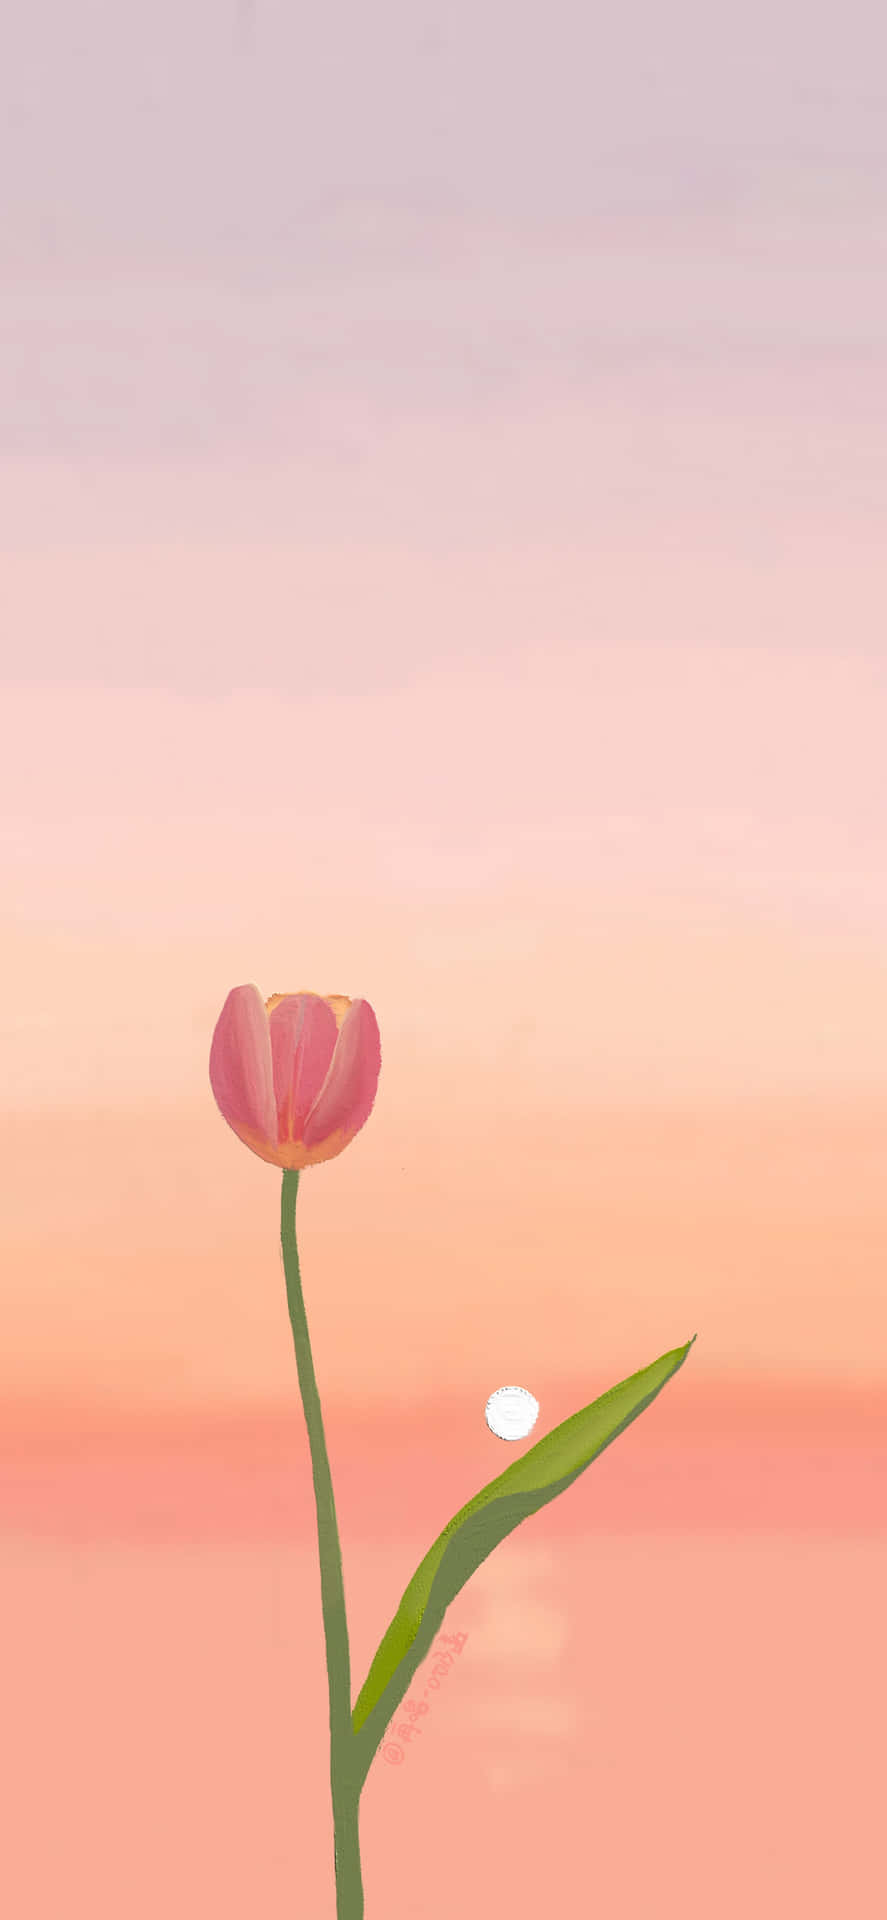 31 Pictures of Tulips for Wallpaper  WallpaperSafari